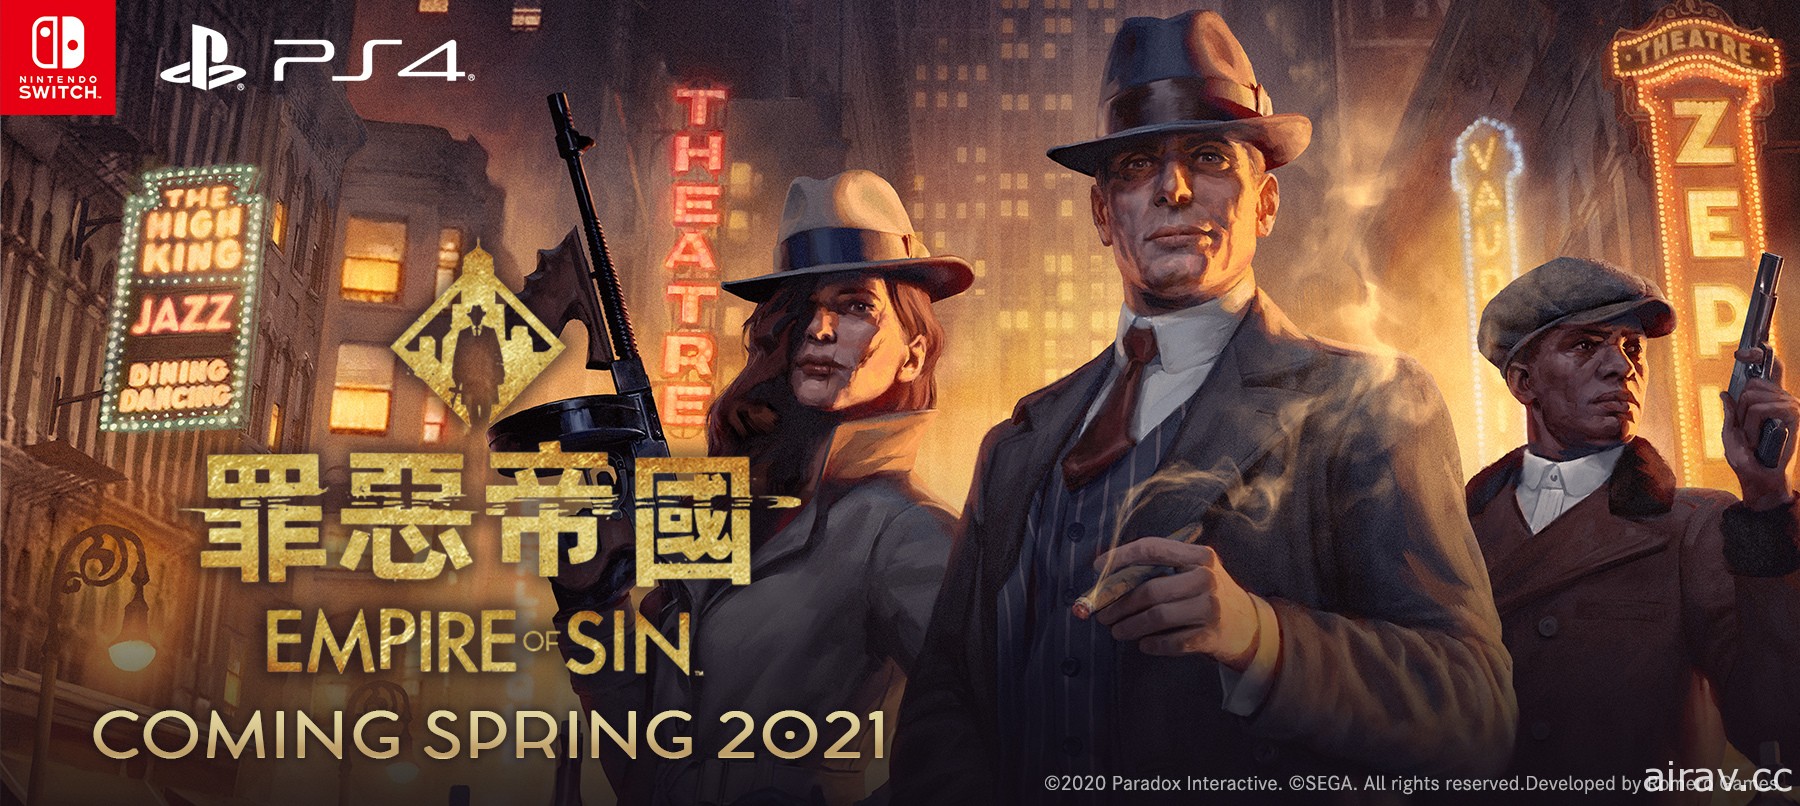 SEGA 将于明年春季推出策略游戏《罪恶帝国》PS4 / Switch 亚洲中文版